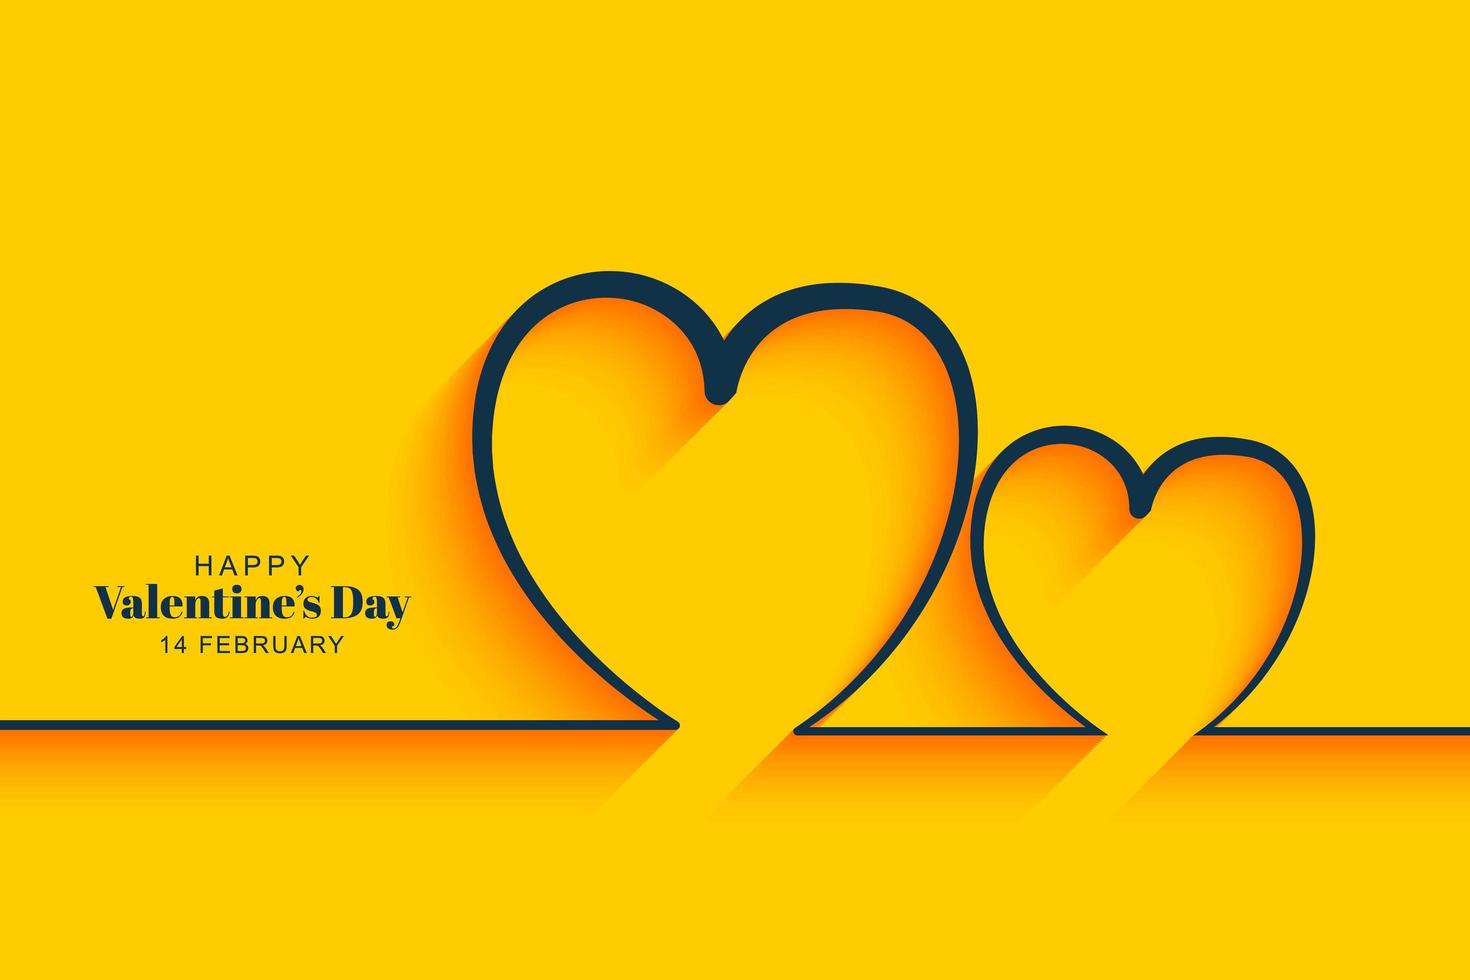 Minimalistic yellow hearts valentine's day card design